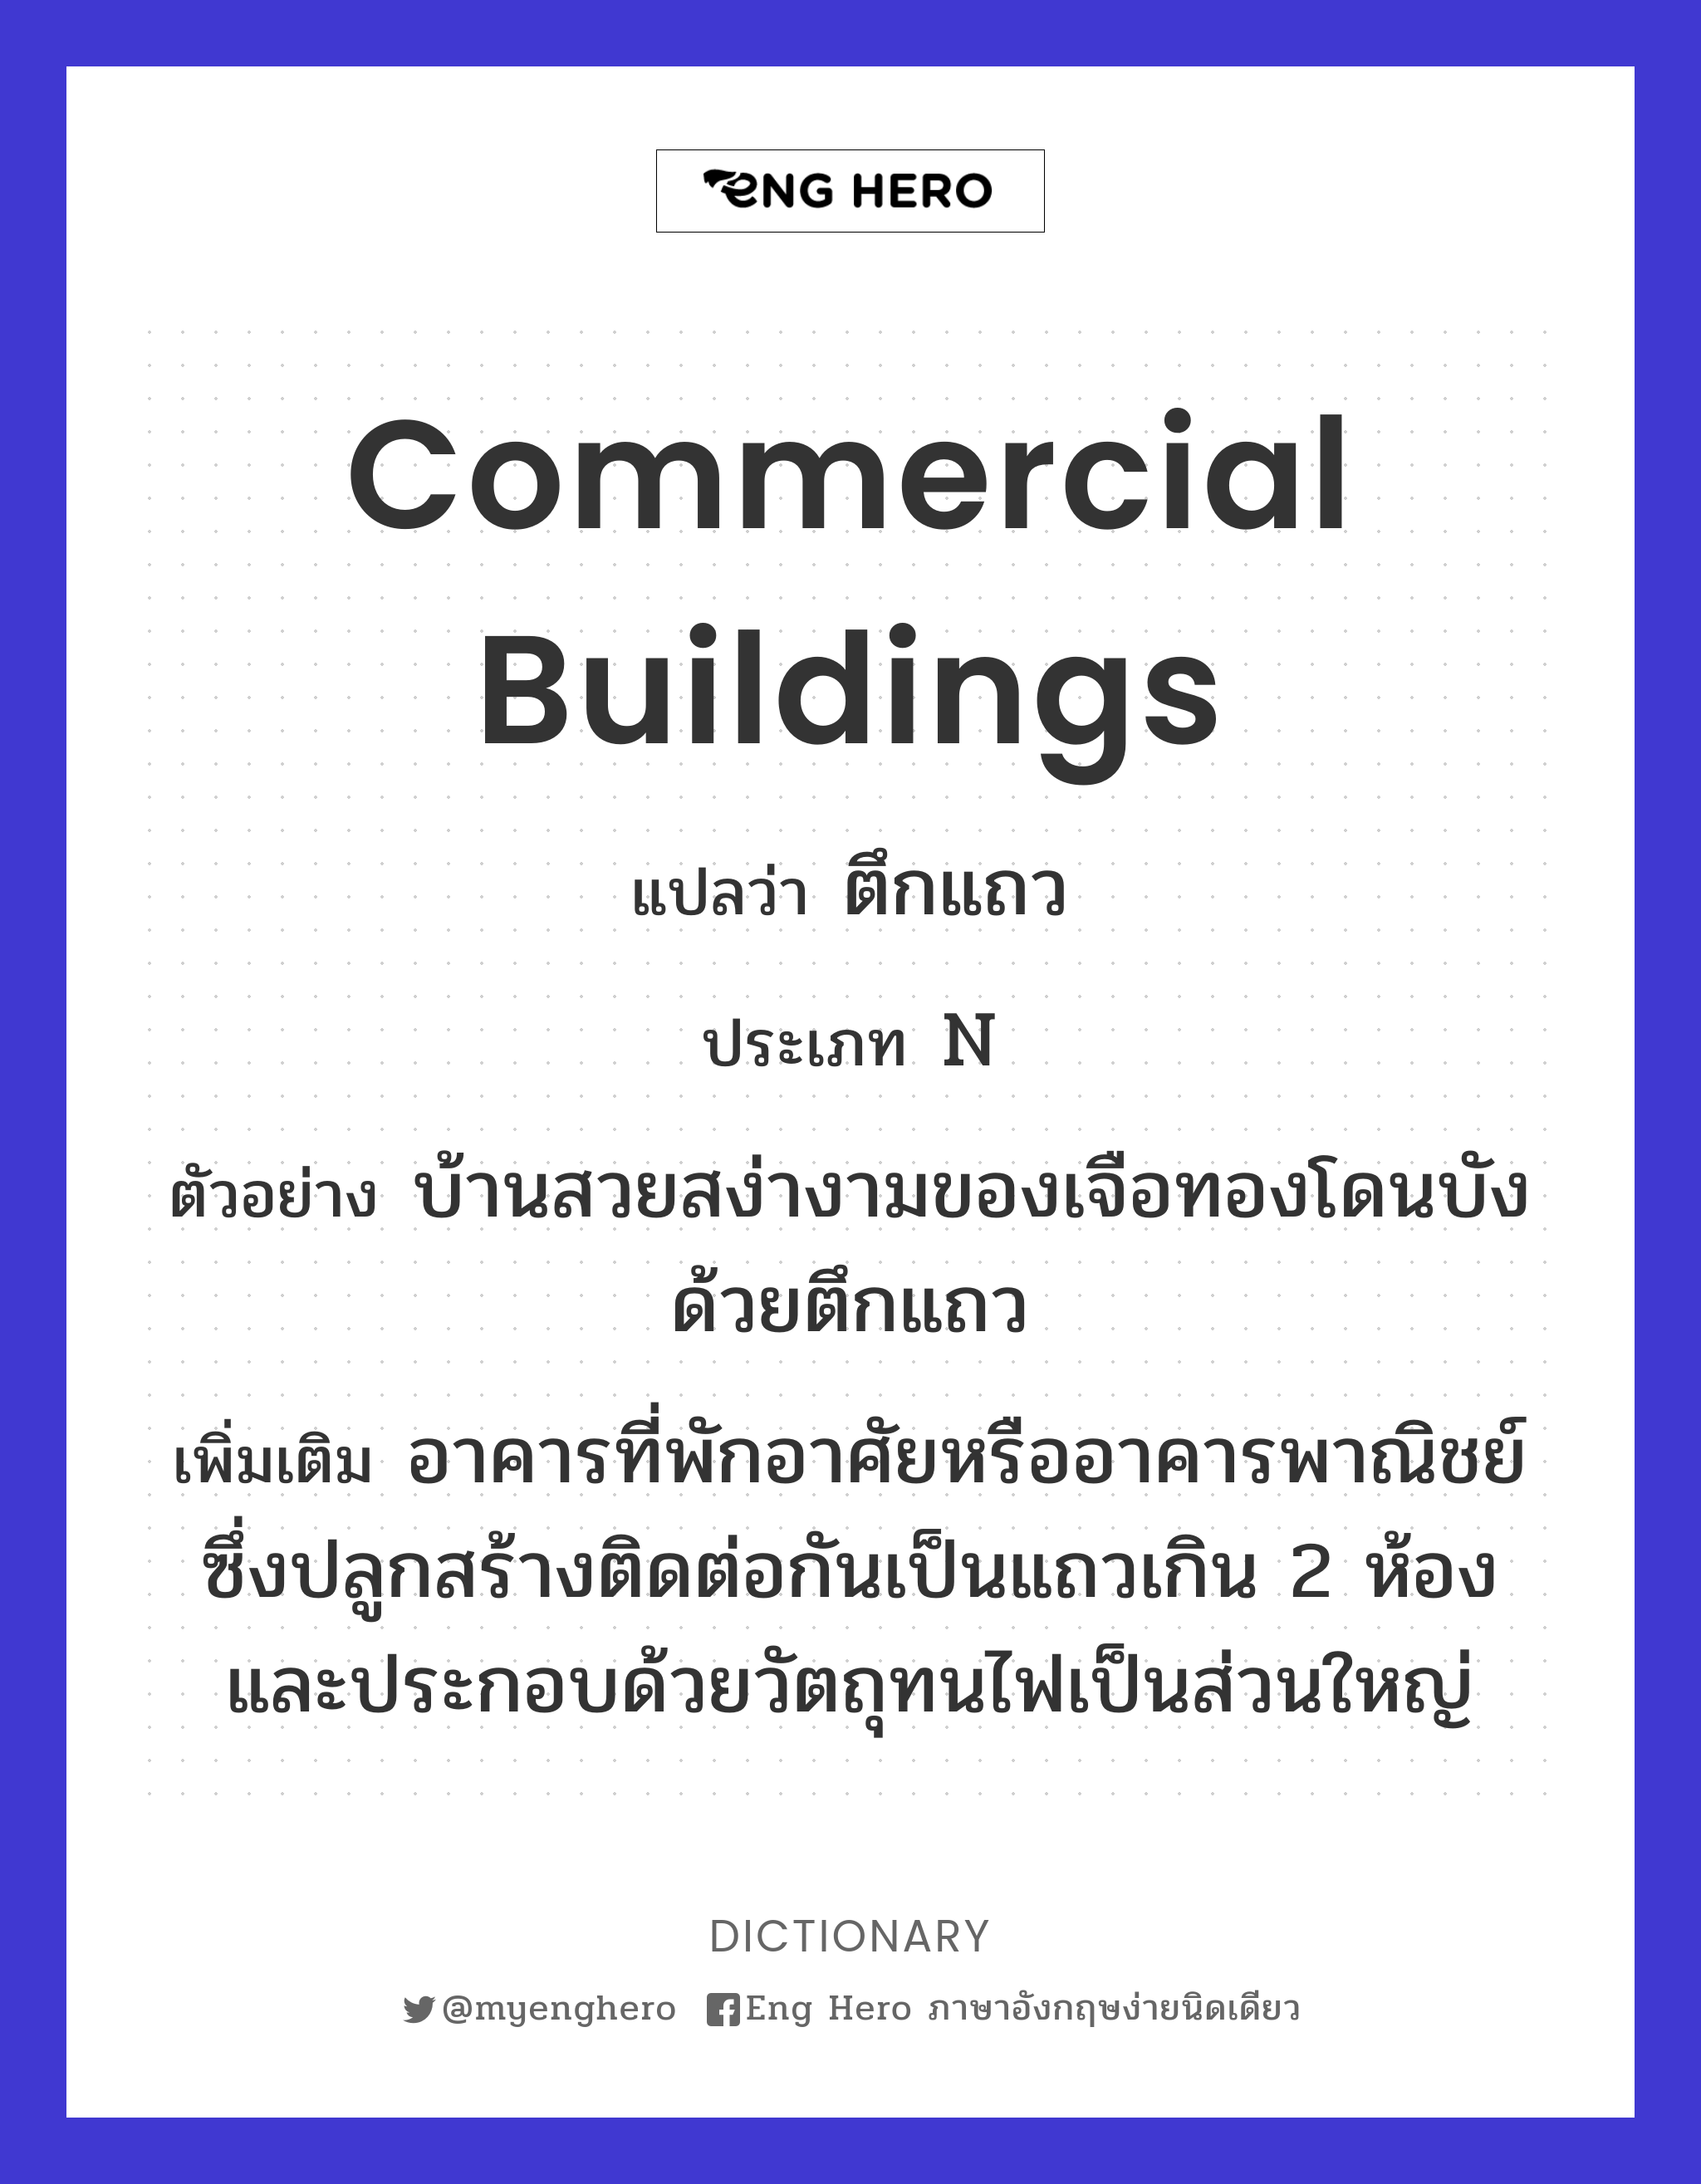 commercial buildings